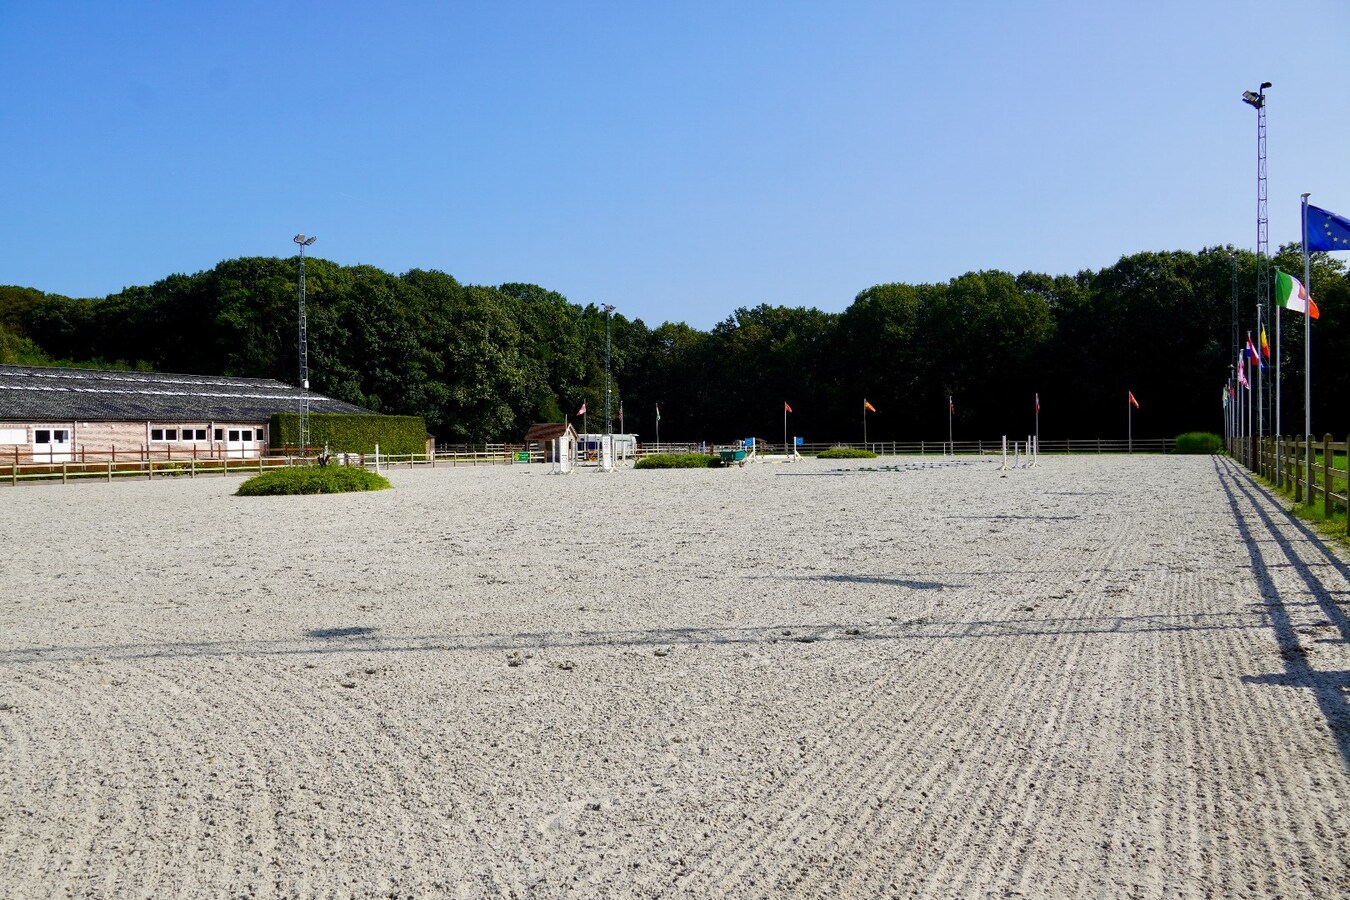 Equestrian center De Kraal with adjacent luxury villa on approximately 9.1 ha/22,5 acres  in Zandhoven. 